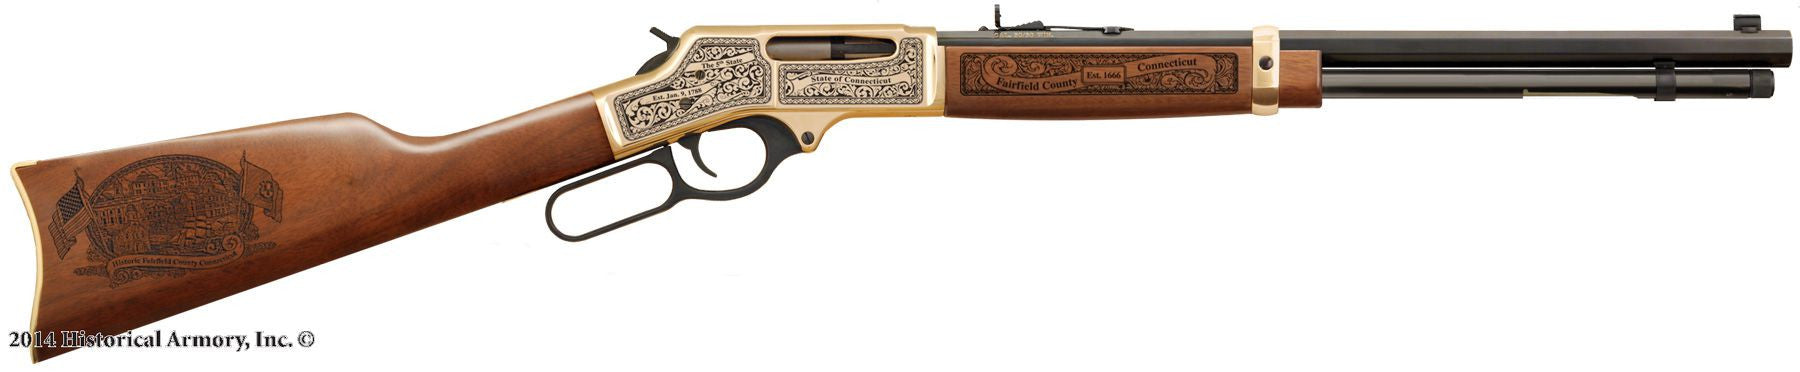 Fairfield-county-connecticut-engraved-rifle-H009B